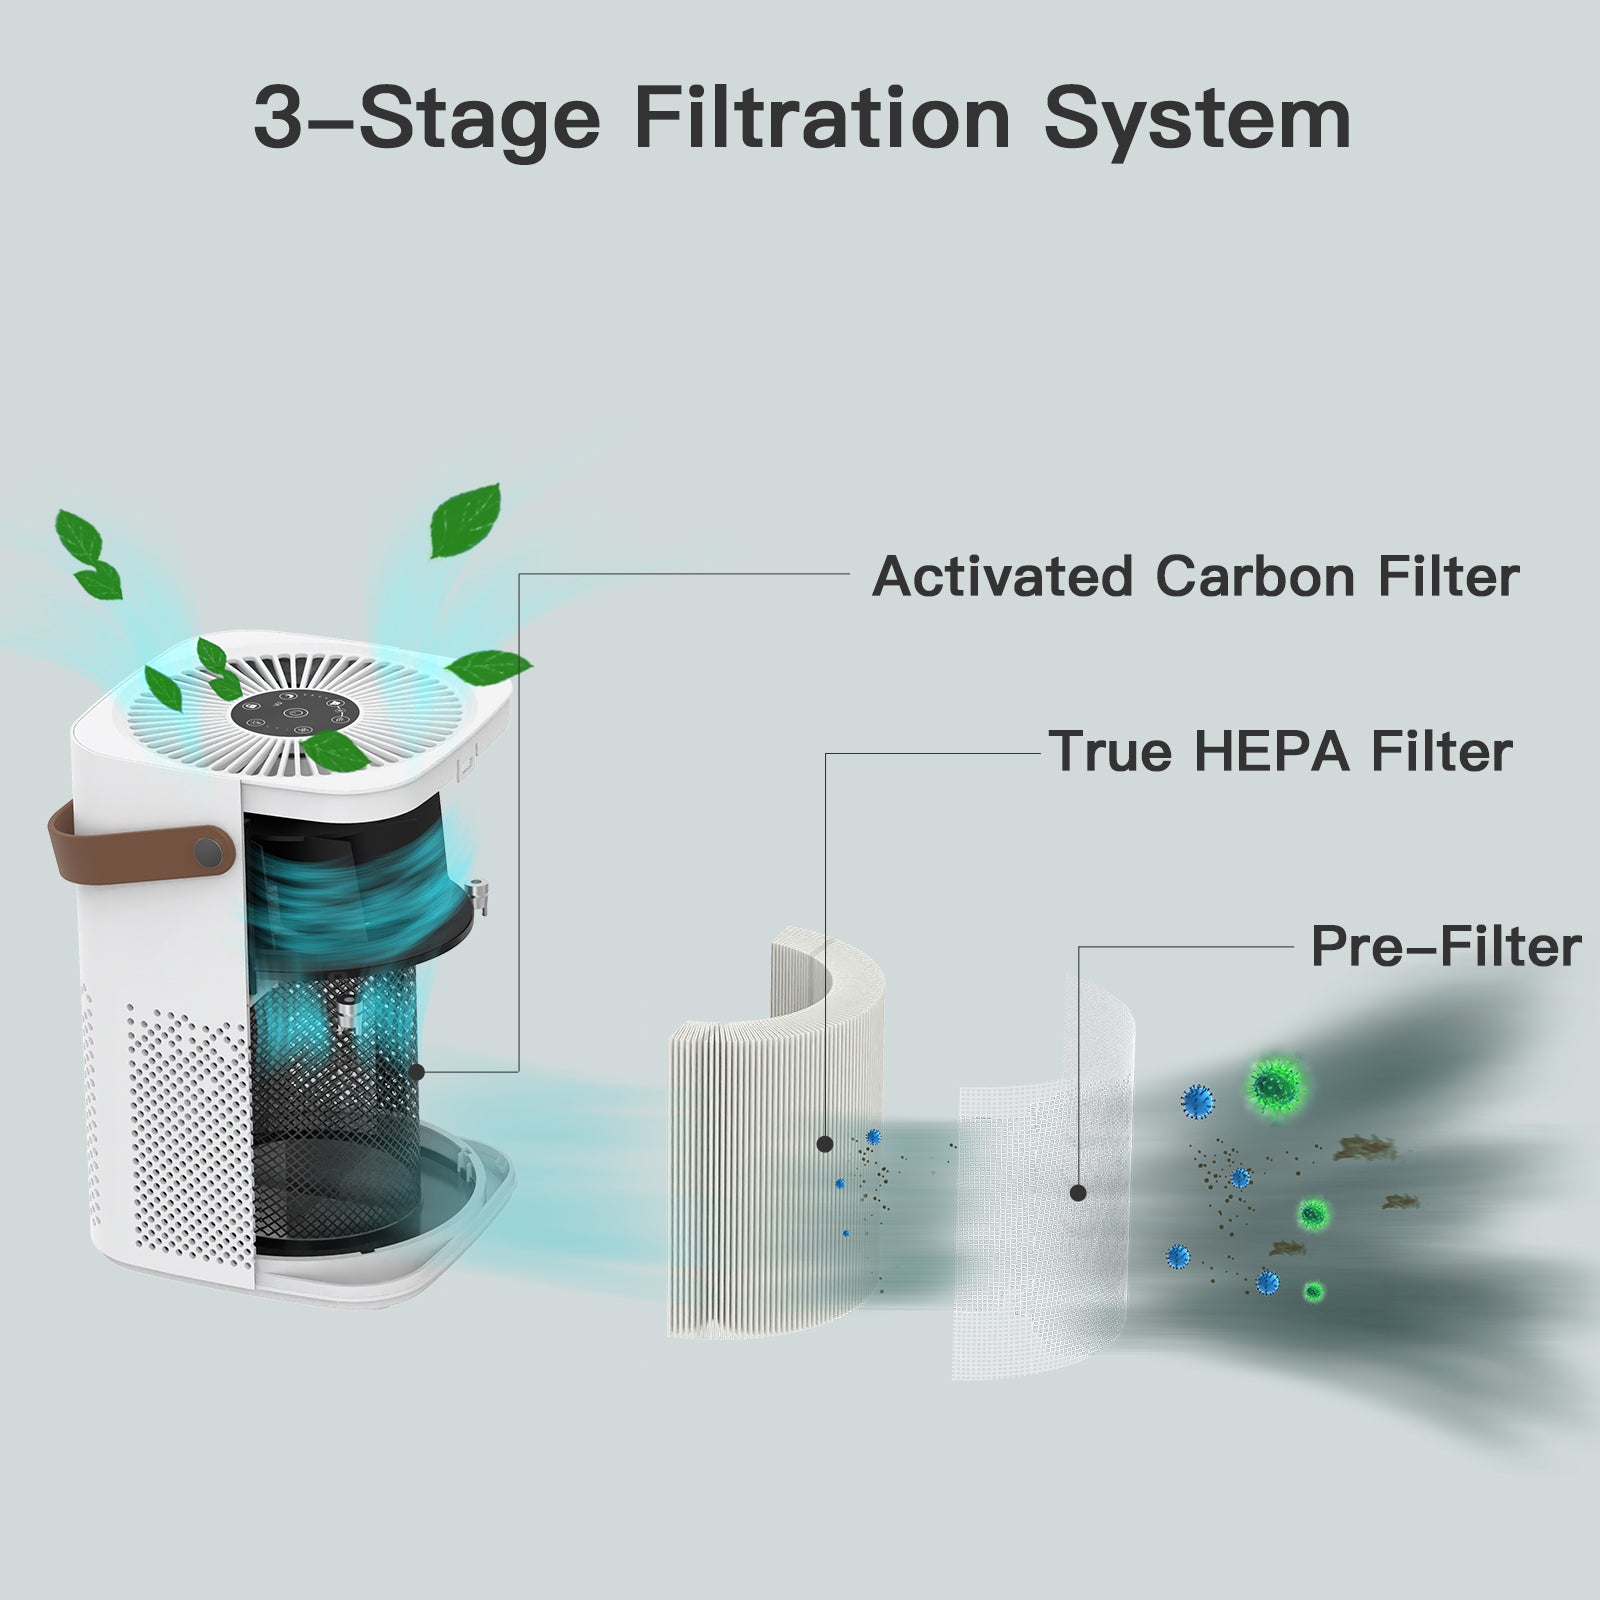 NexiGo Mini Air Purifier features a 3-Stage Filtration System